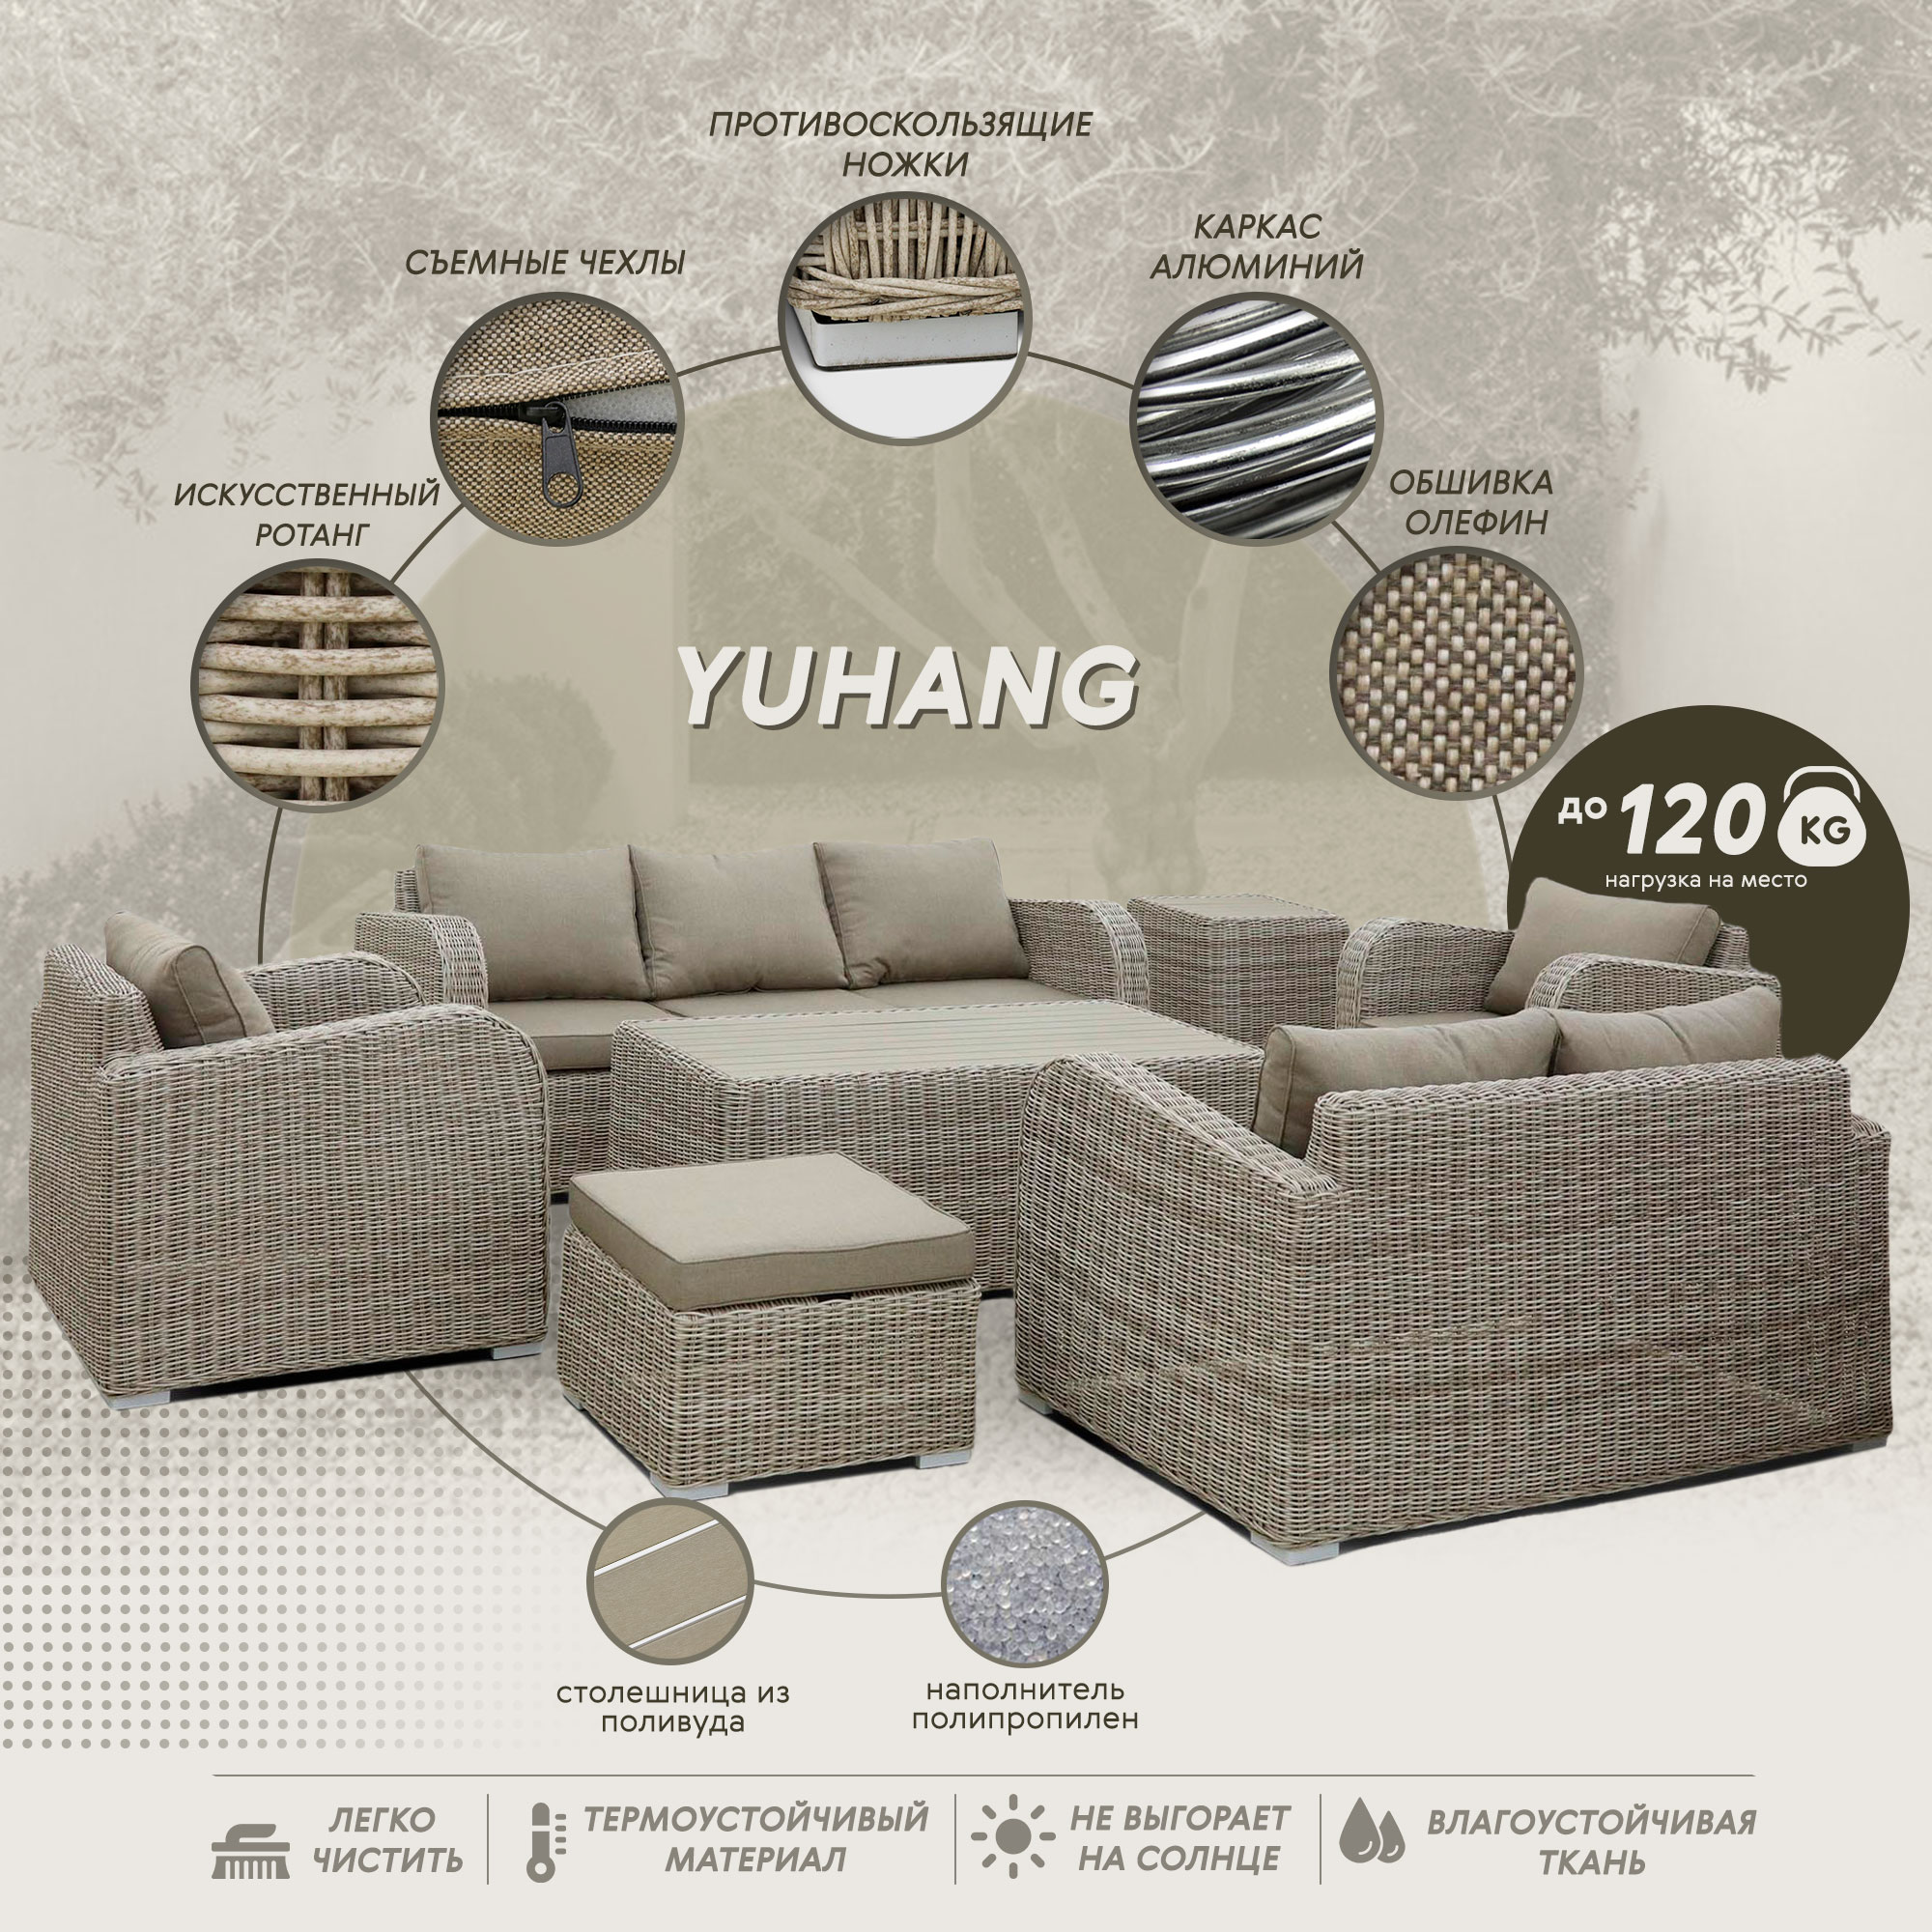 Комплект мебели Yuhang бежево-коричневый 7 предметов, размер 210х86х73/145х86х73 - фото 3